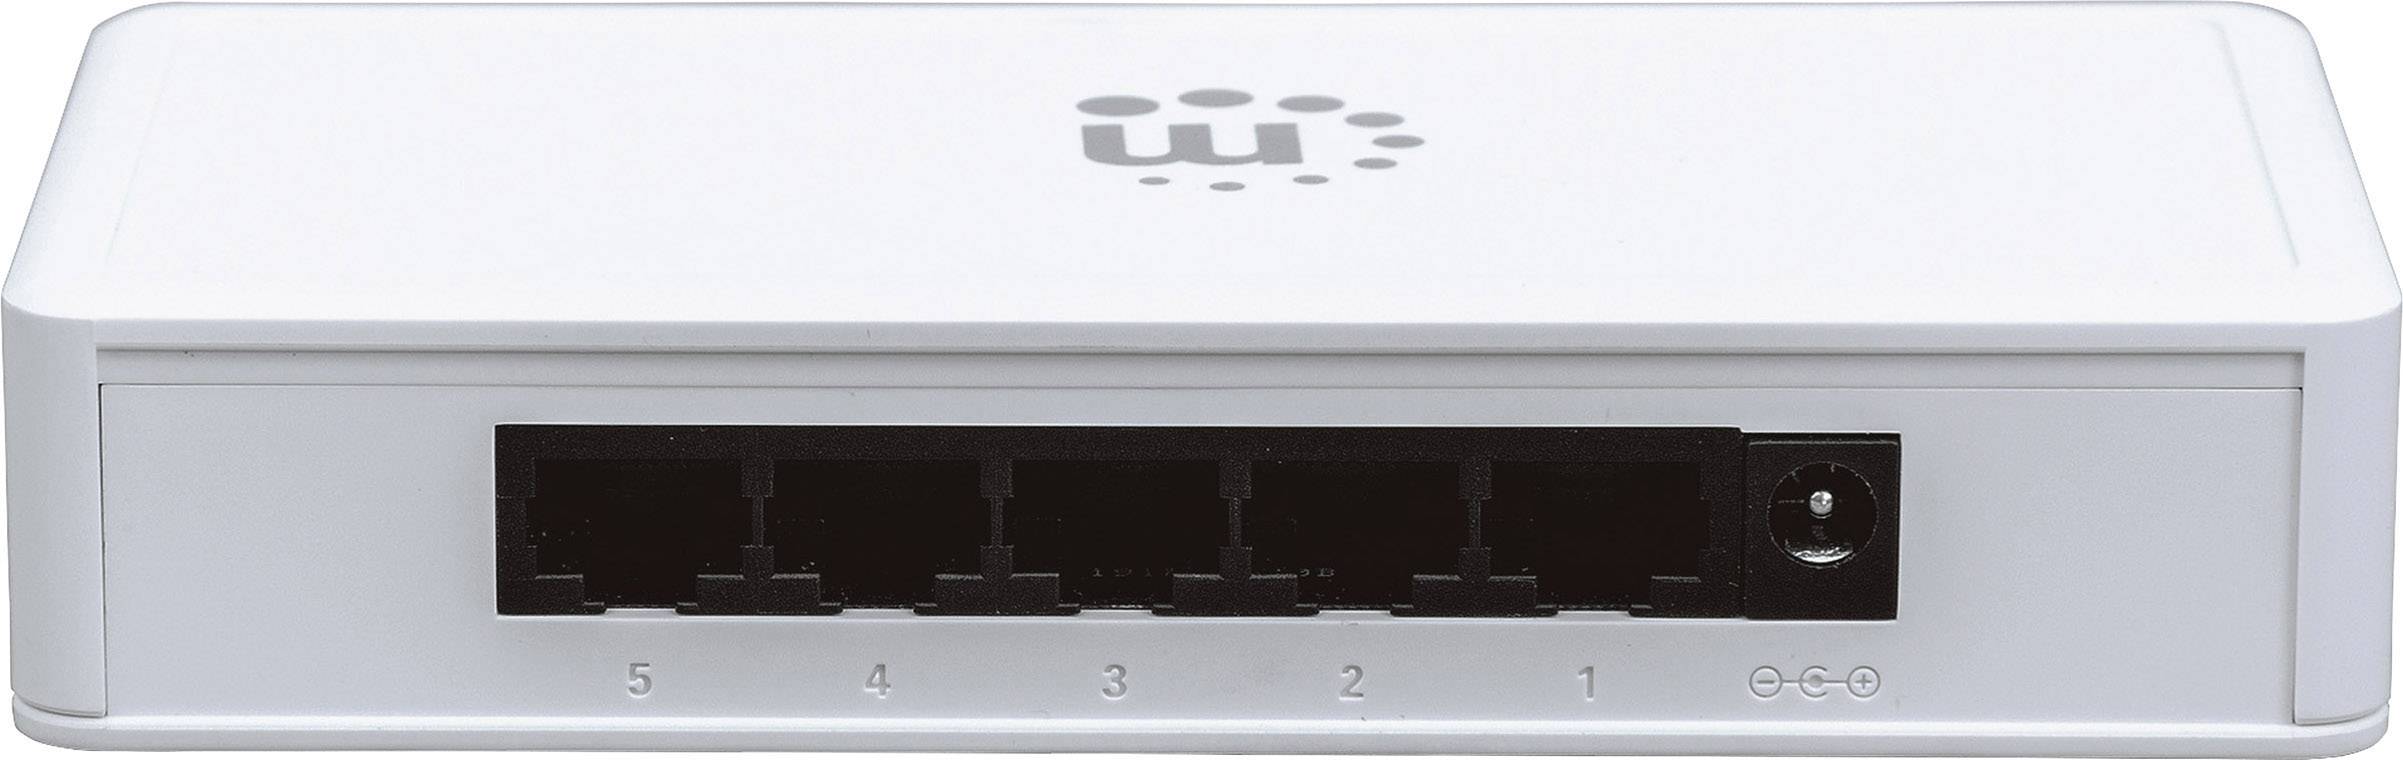 Manhattan 8-Port Fast Ethernet Switch - 4-Pack (526142)